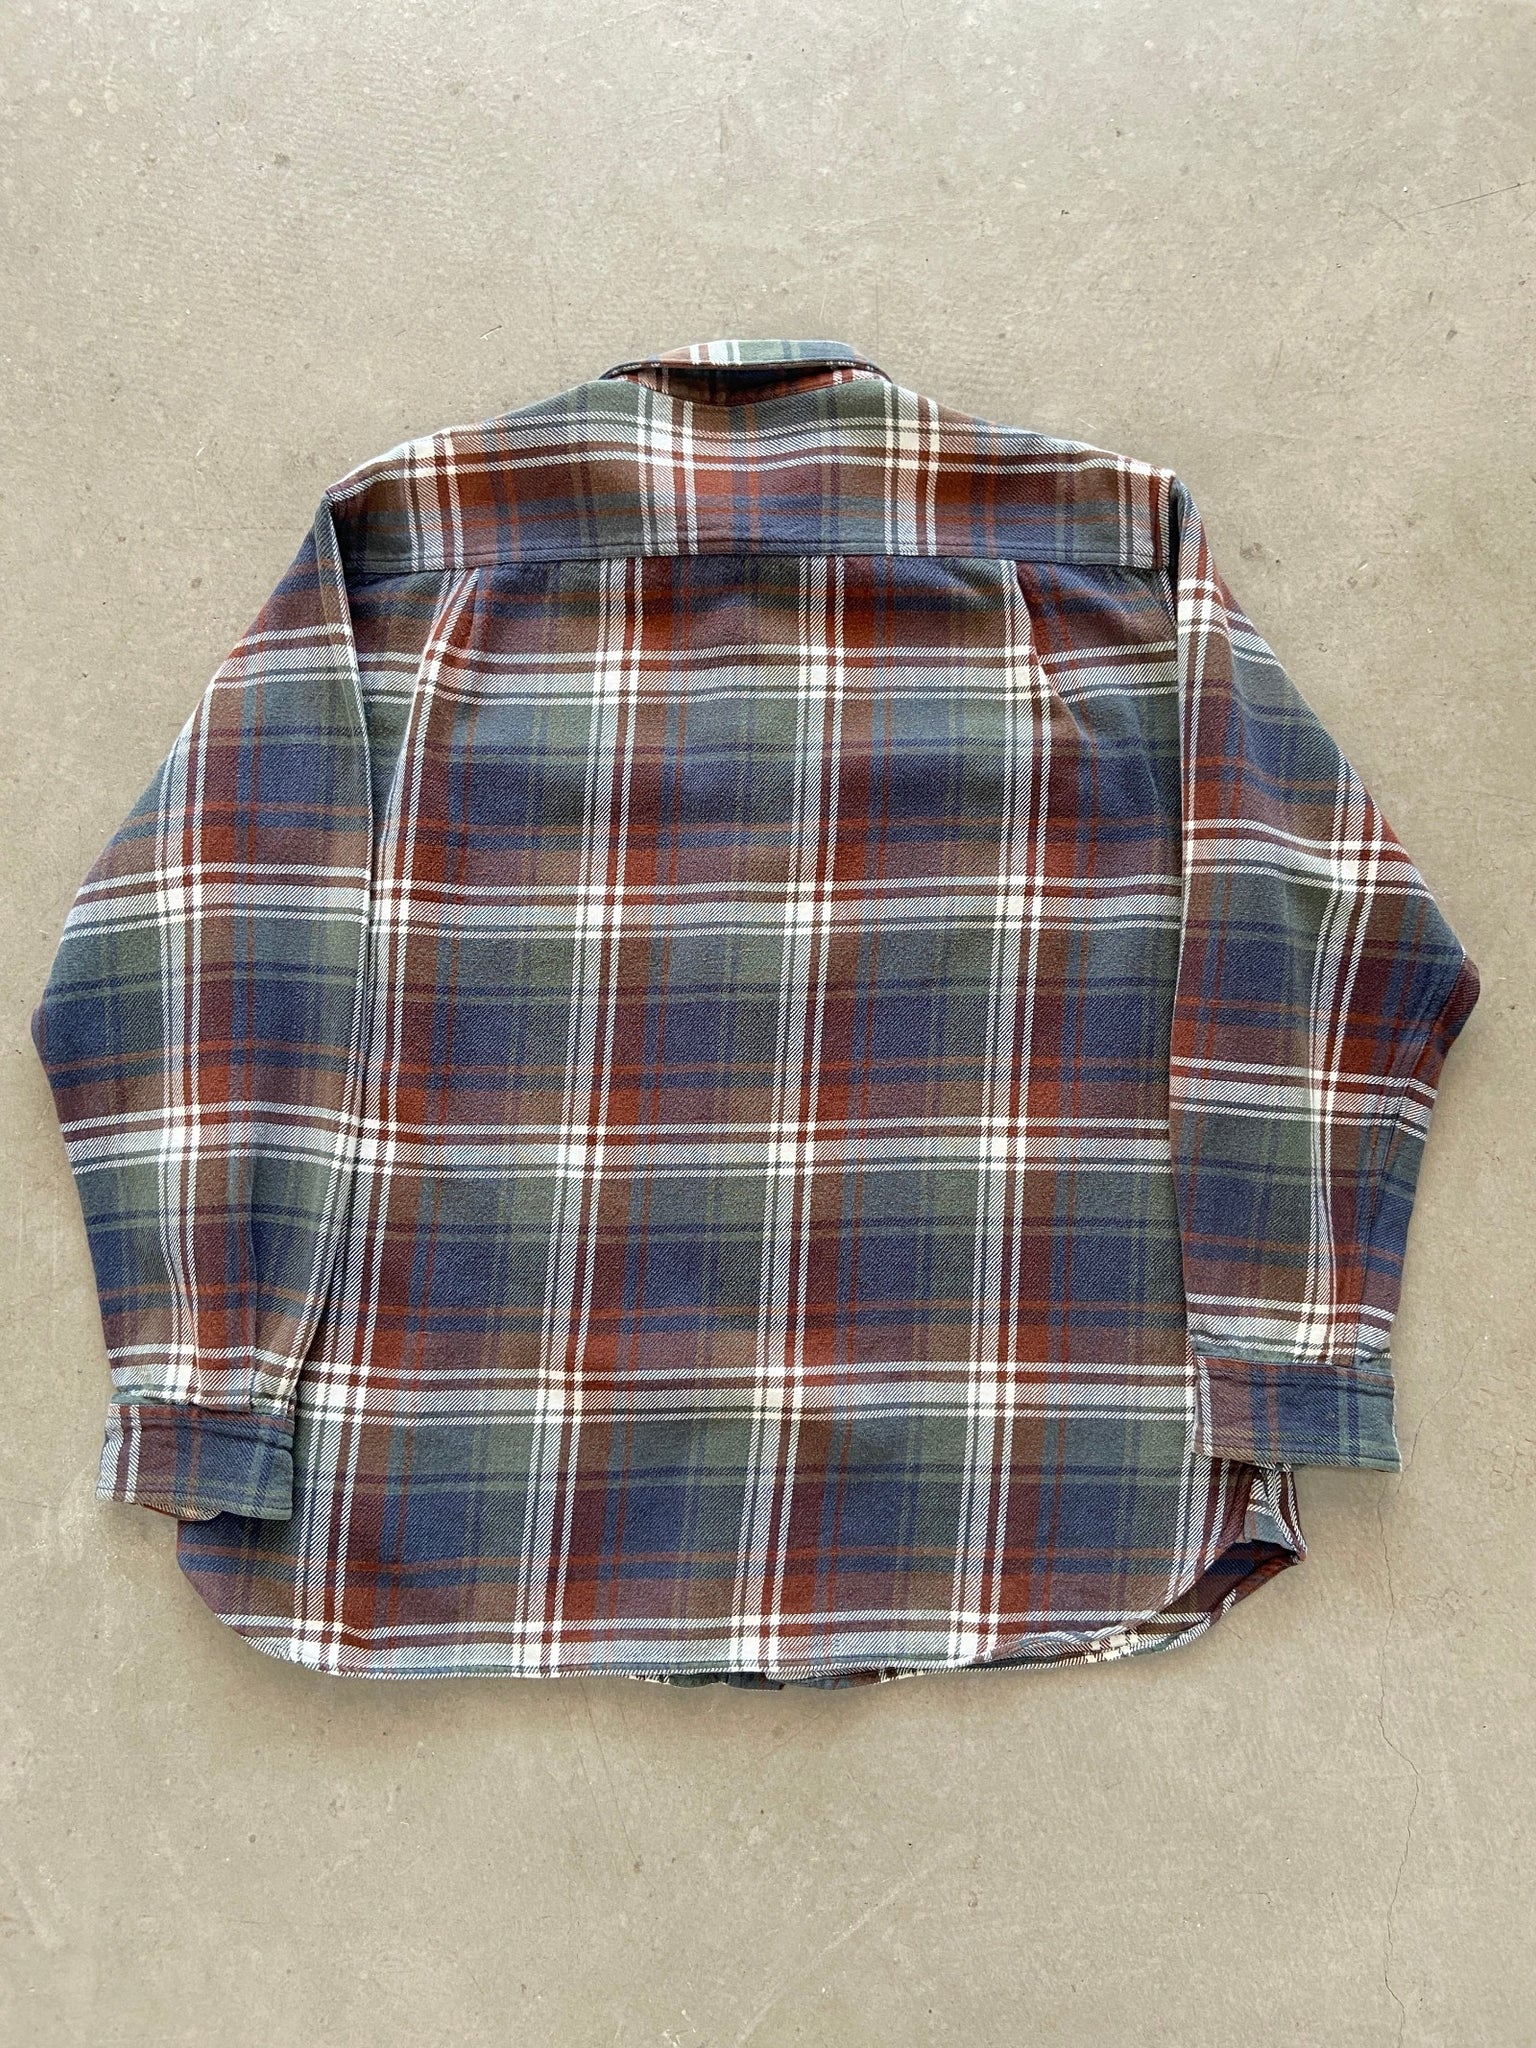 True Grit Flannel Check Shirt - XL